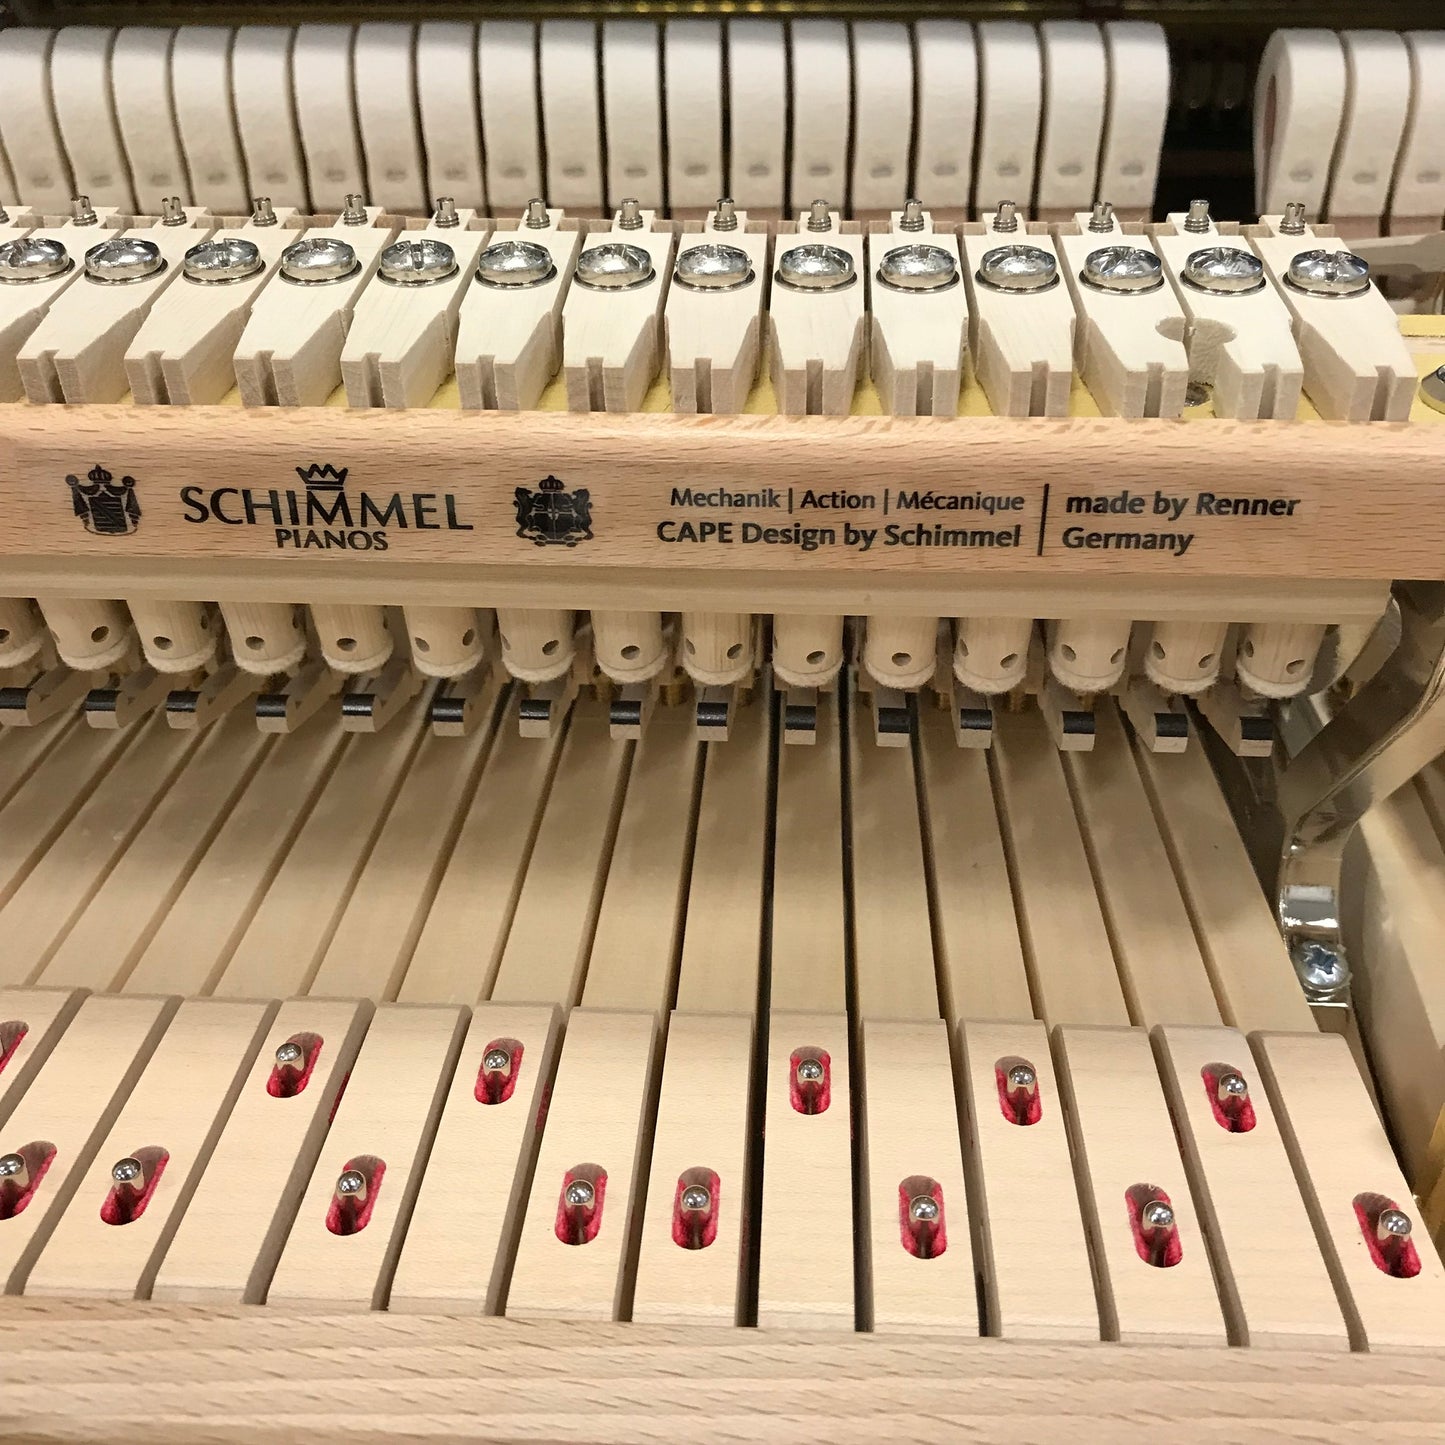 Schimmel Classic C169 Grand Piano